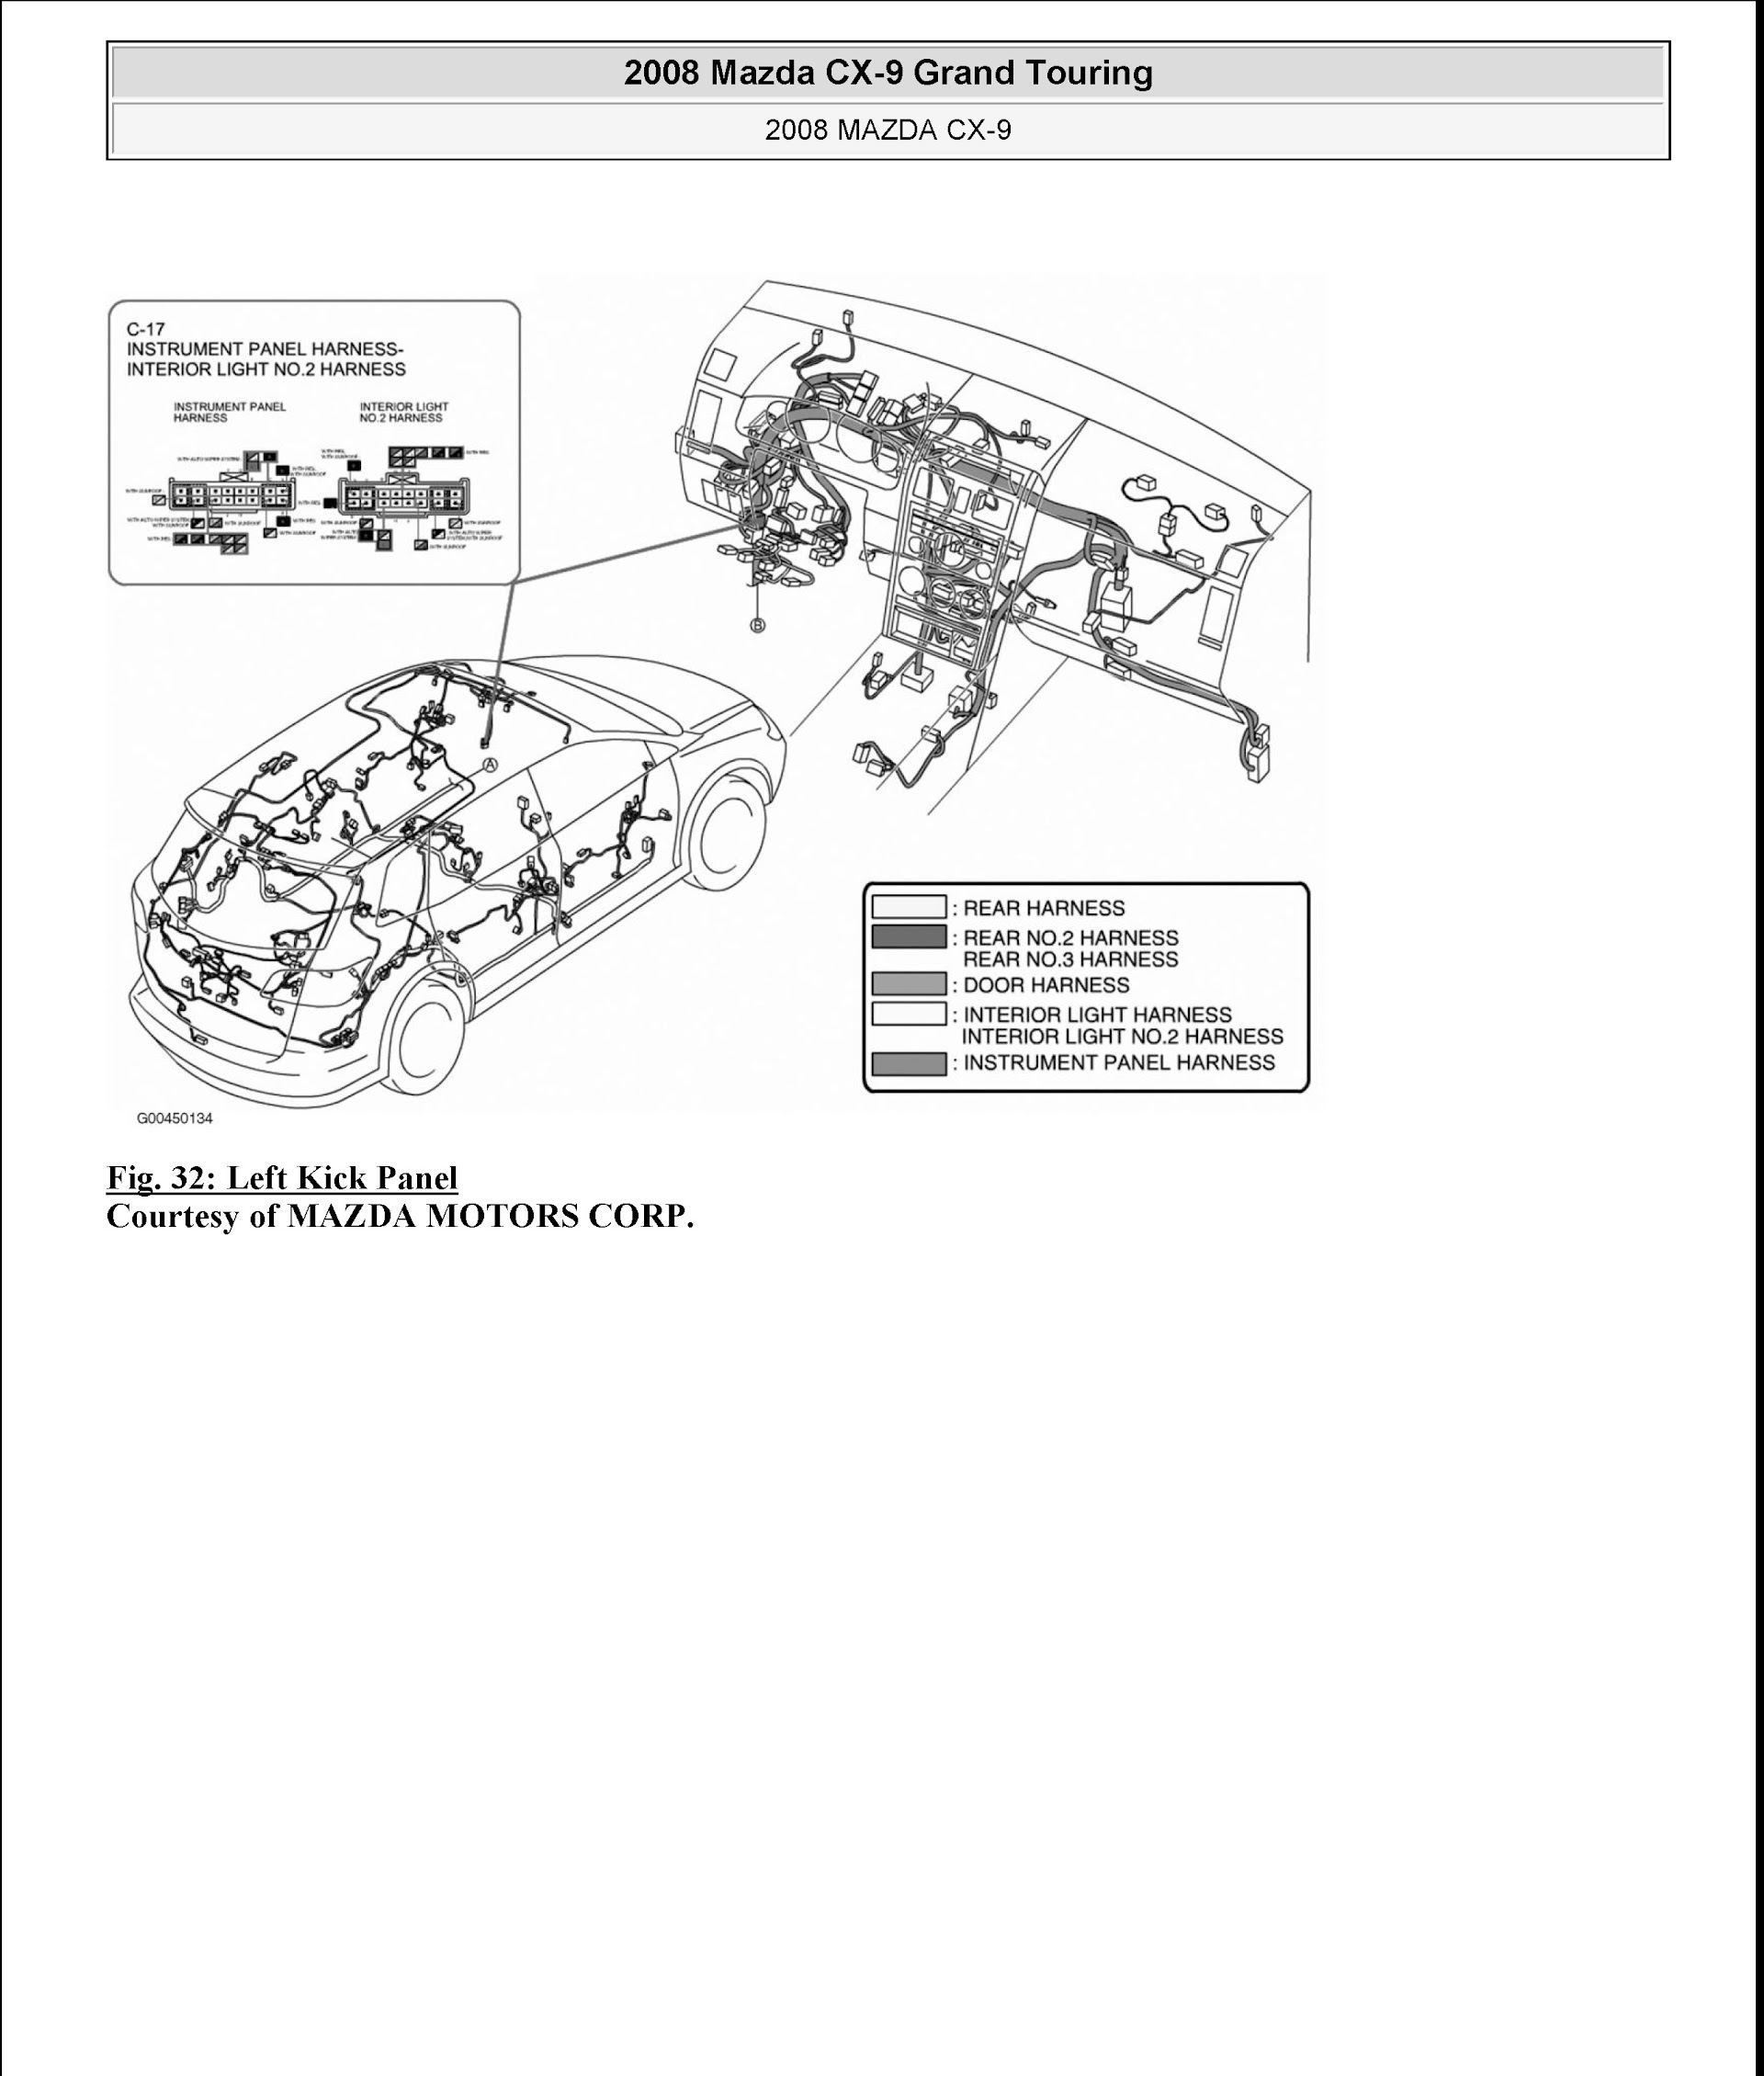 2008 Mazda CX-9 Repair Manual "Grand Touring", Wiring System